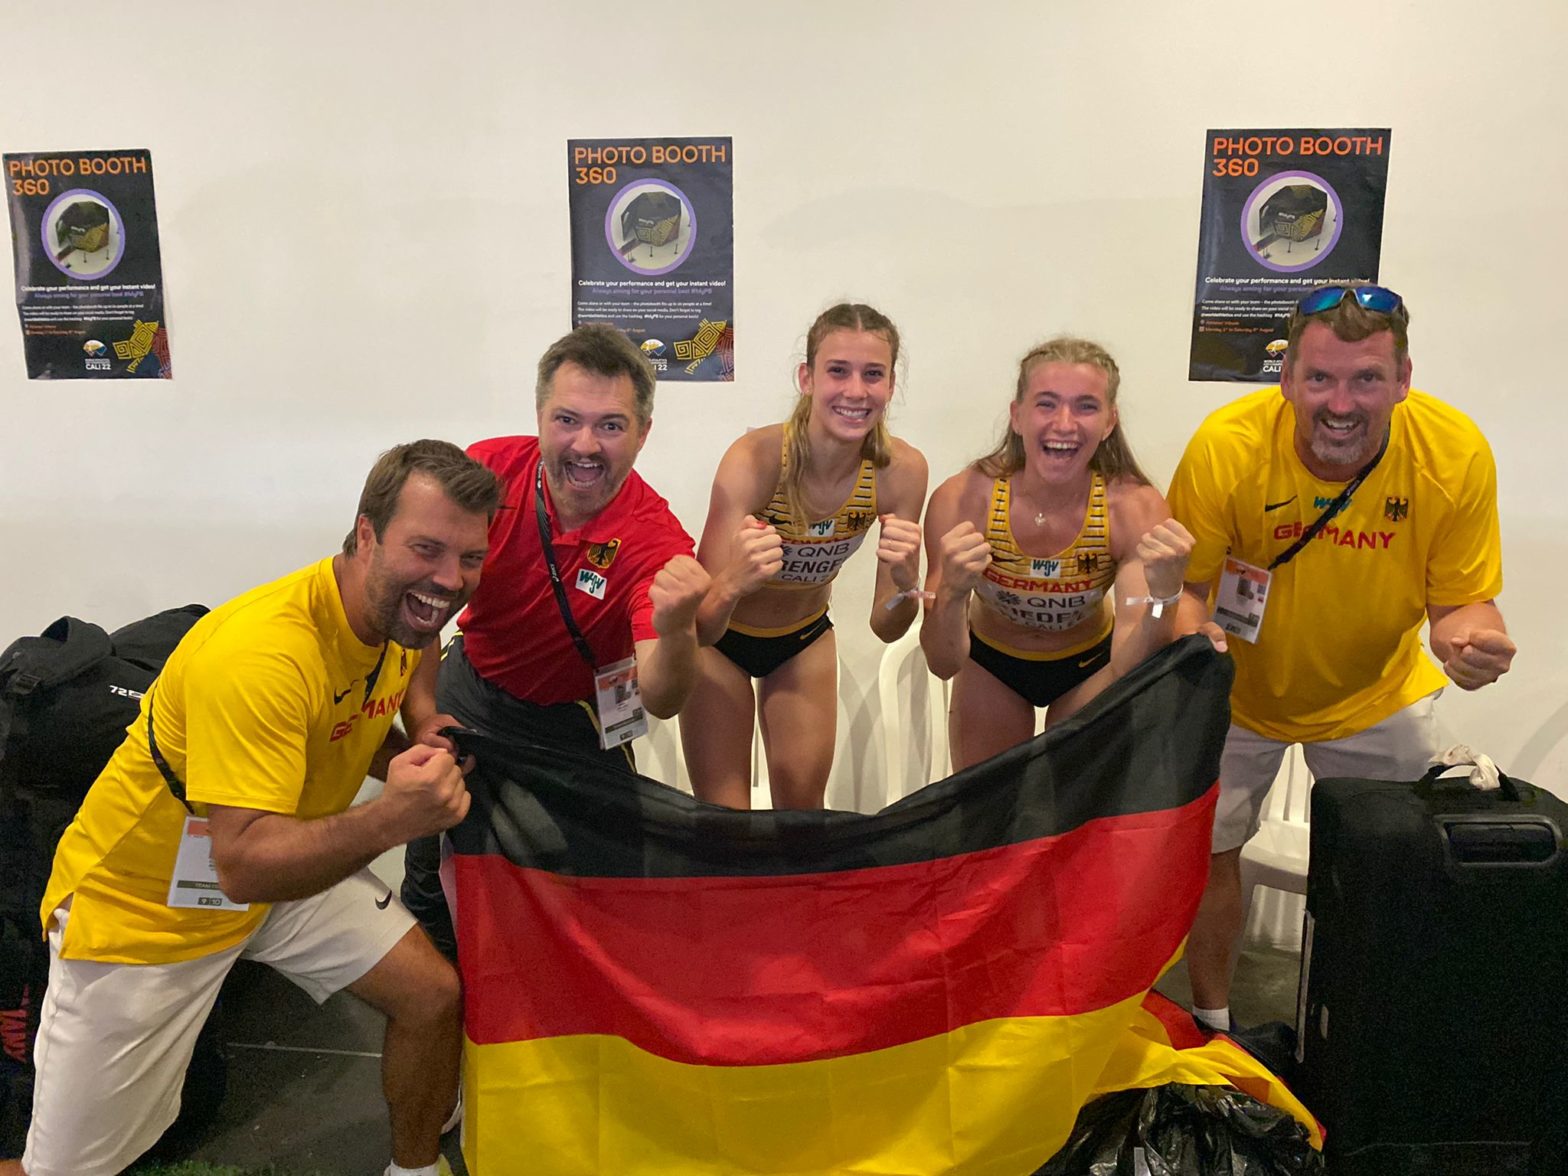 Große Freude über zwei Medaillen. Von links: Florian Bauder, David Violakis (Physiotherapeut), Sandrina Sprengel, Serina Riedel, Carsten Hodea